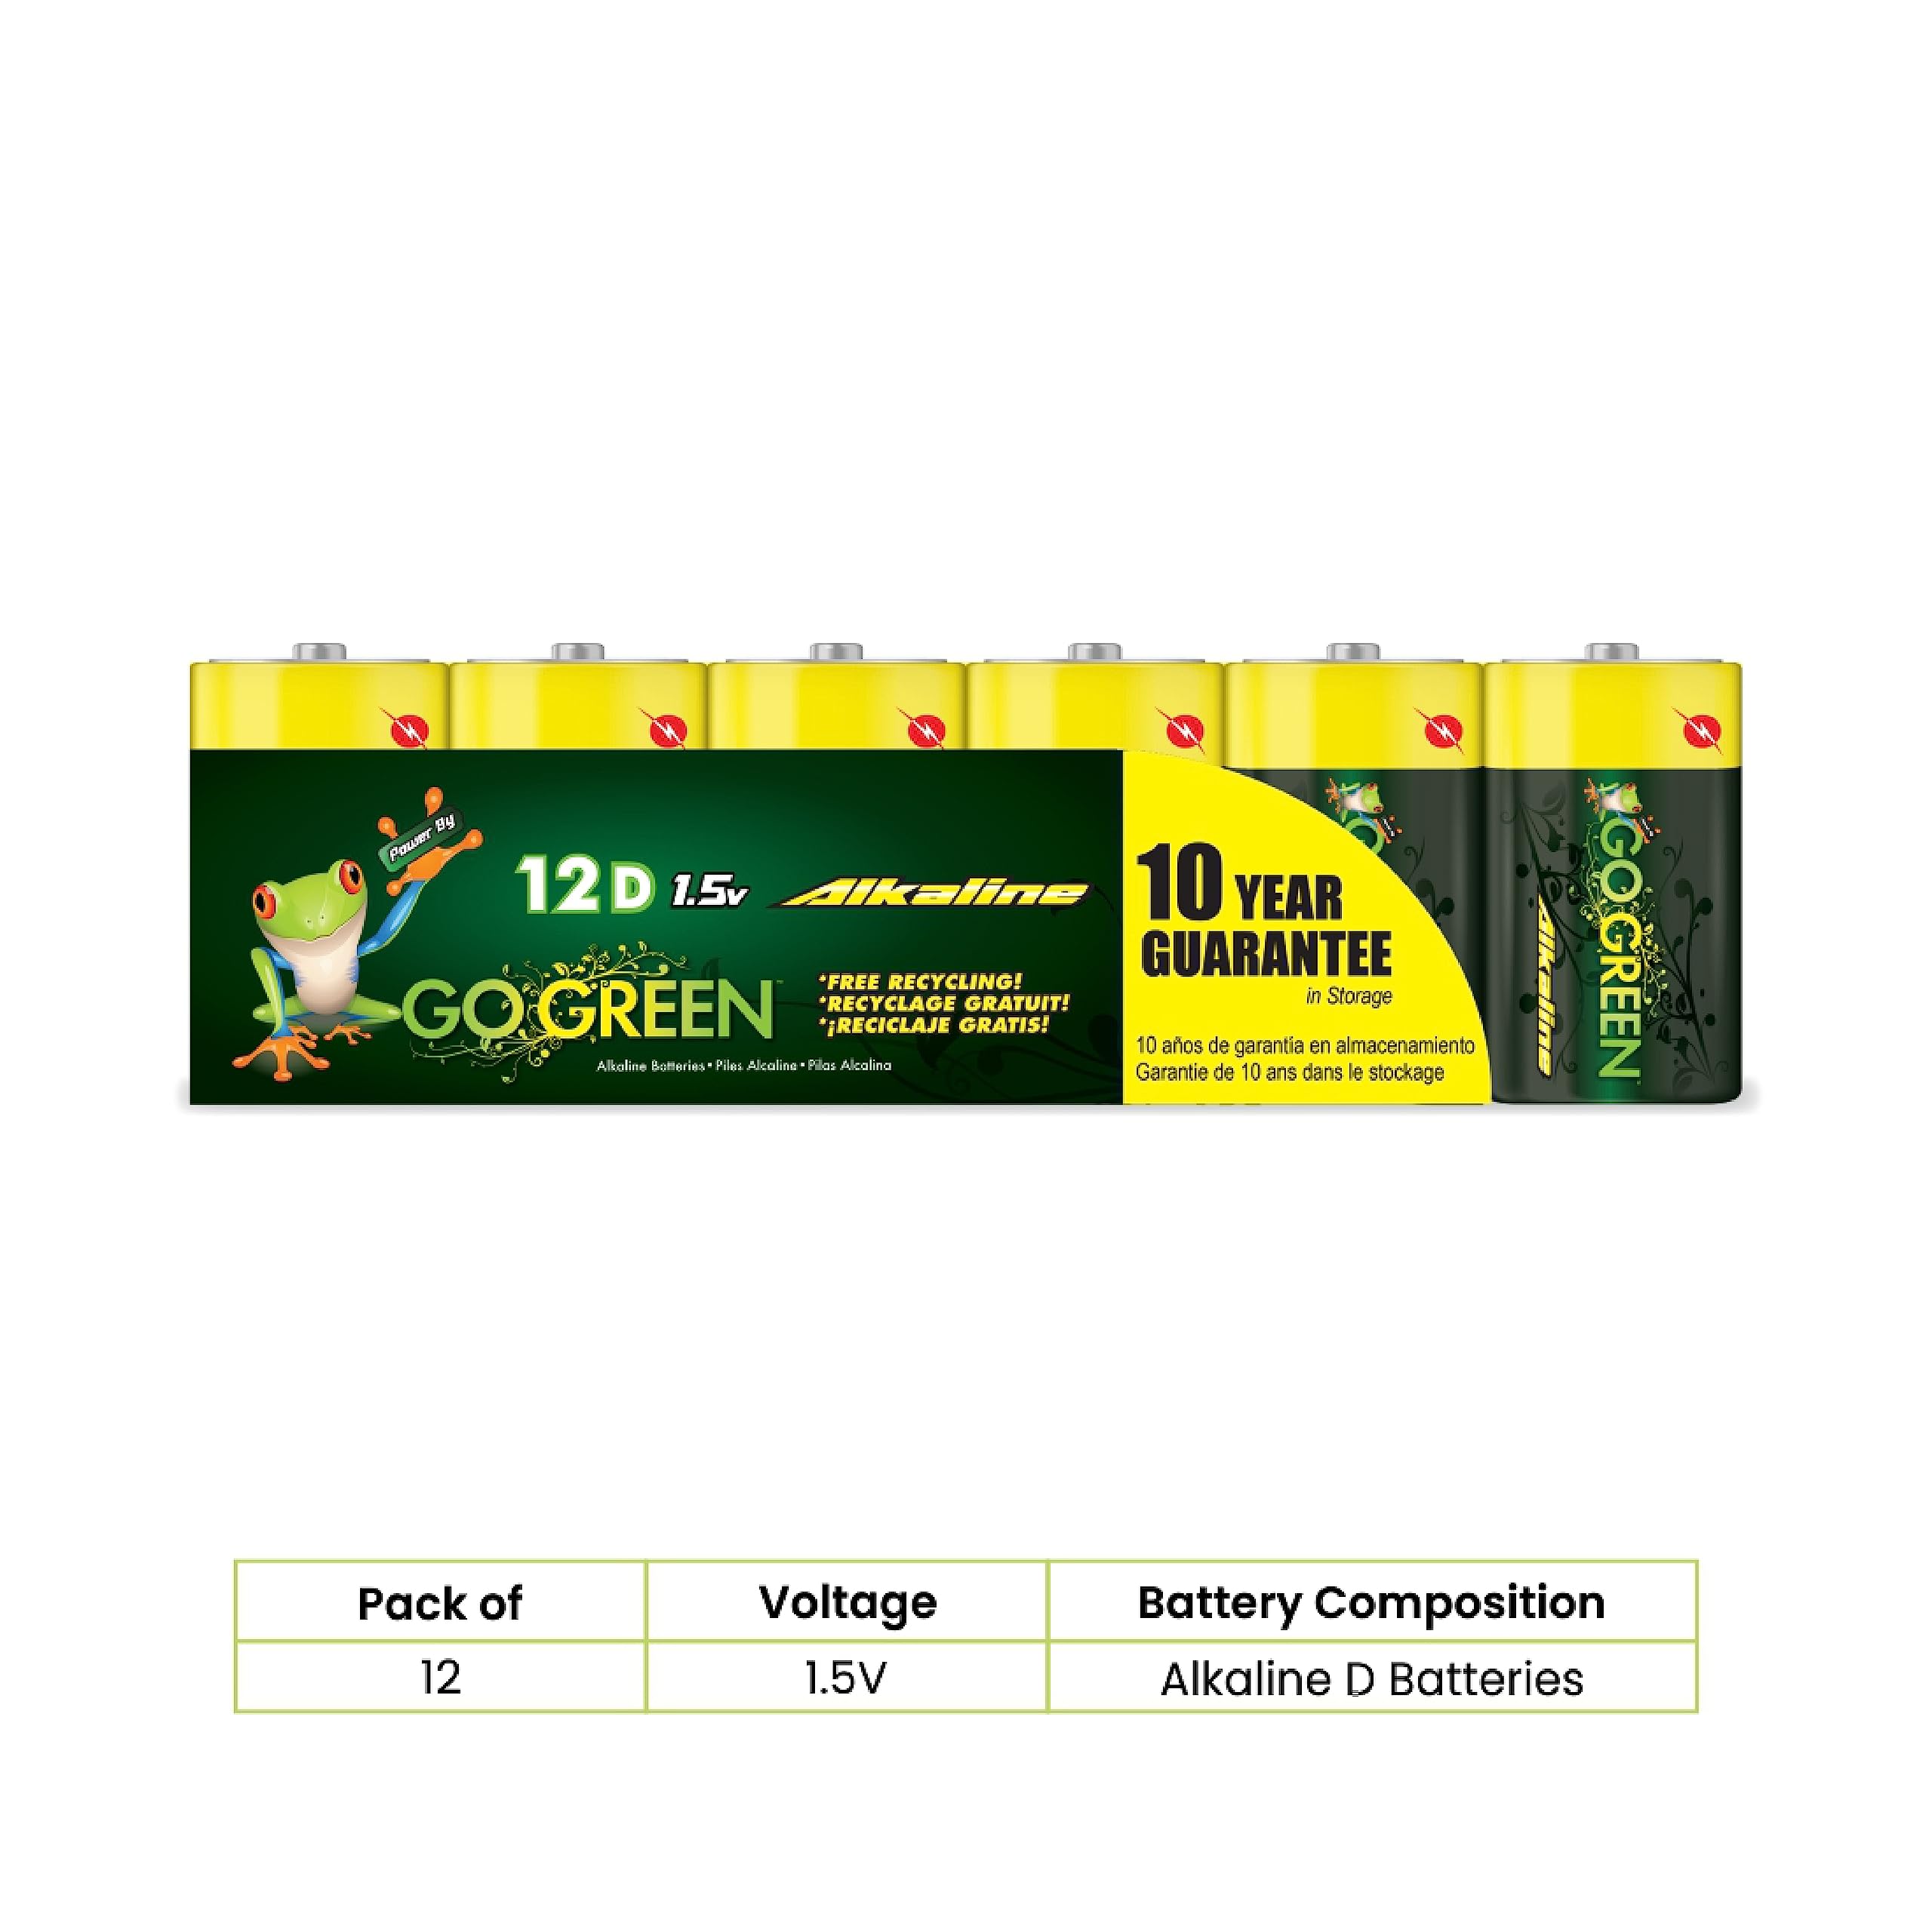 GoGreen Power (24014) Eco Friendly Alkaline D Batteries - No Lead, Cadmium or Mercury - Pack of 12